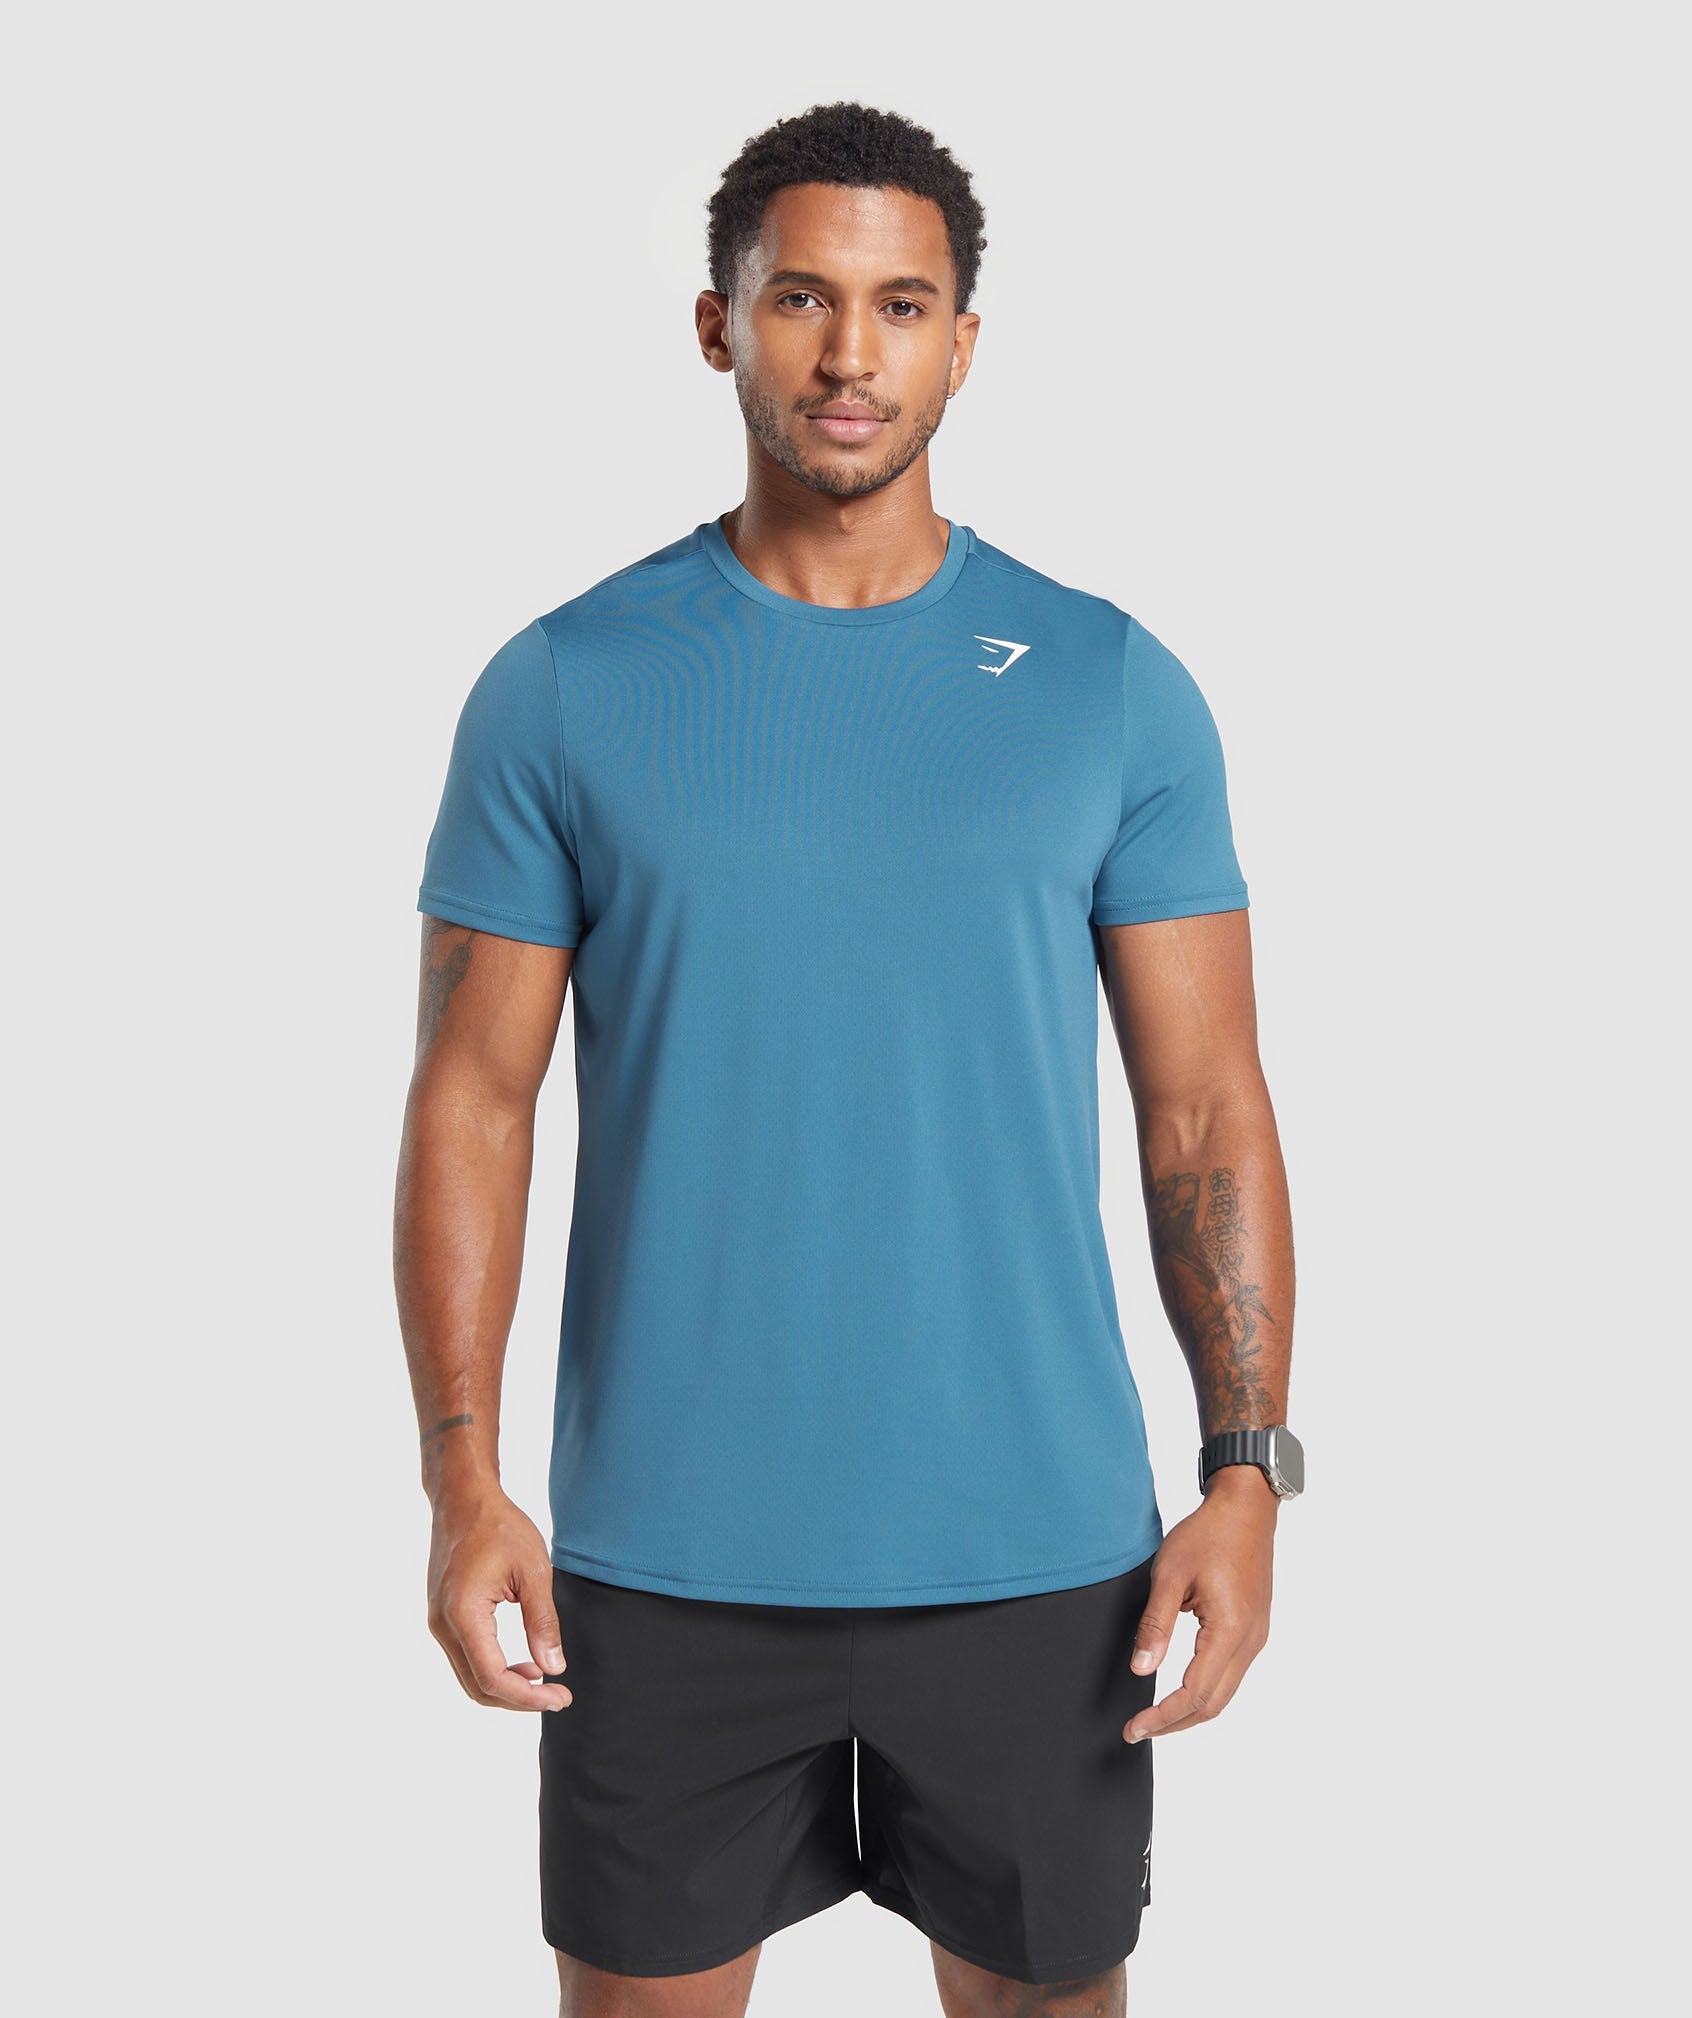 Gymshark Arrival T-Shirt (Reg Fit) - Utility Blue | Gymshark